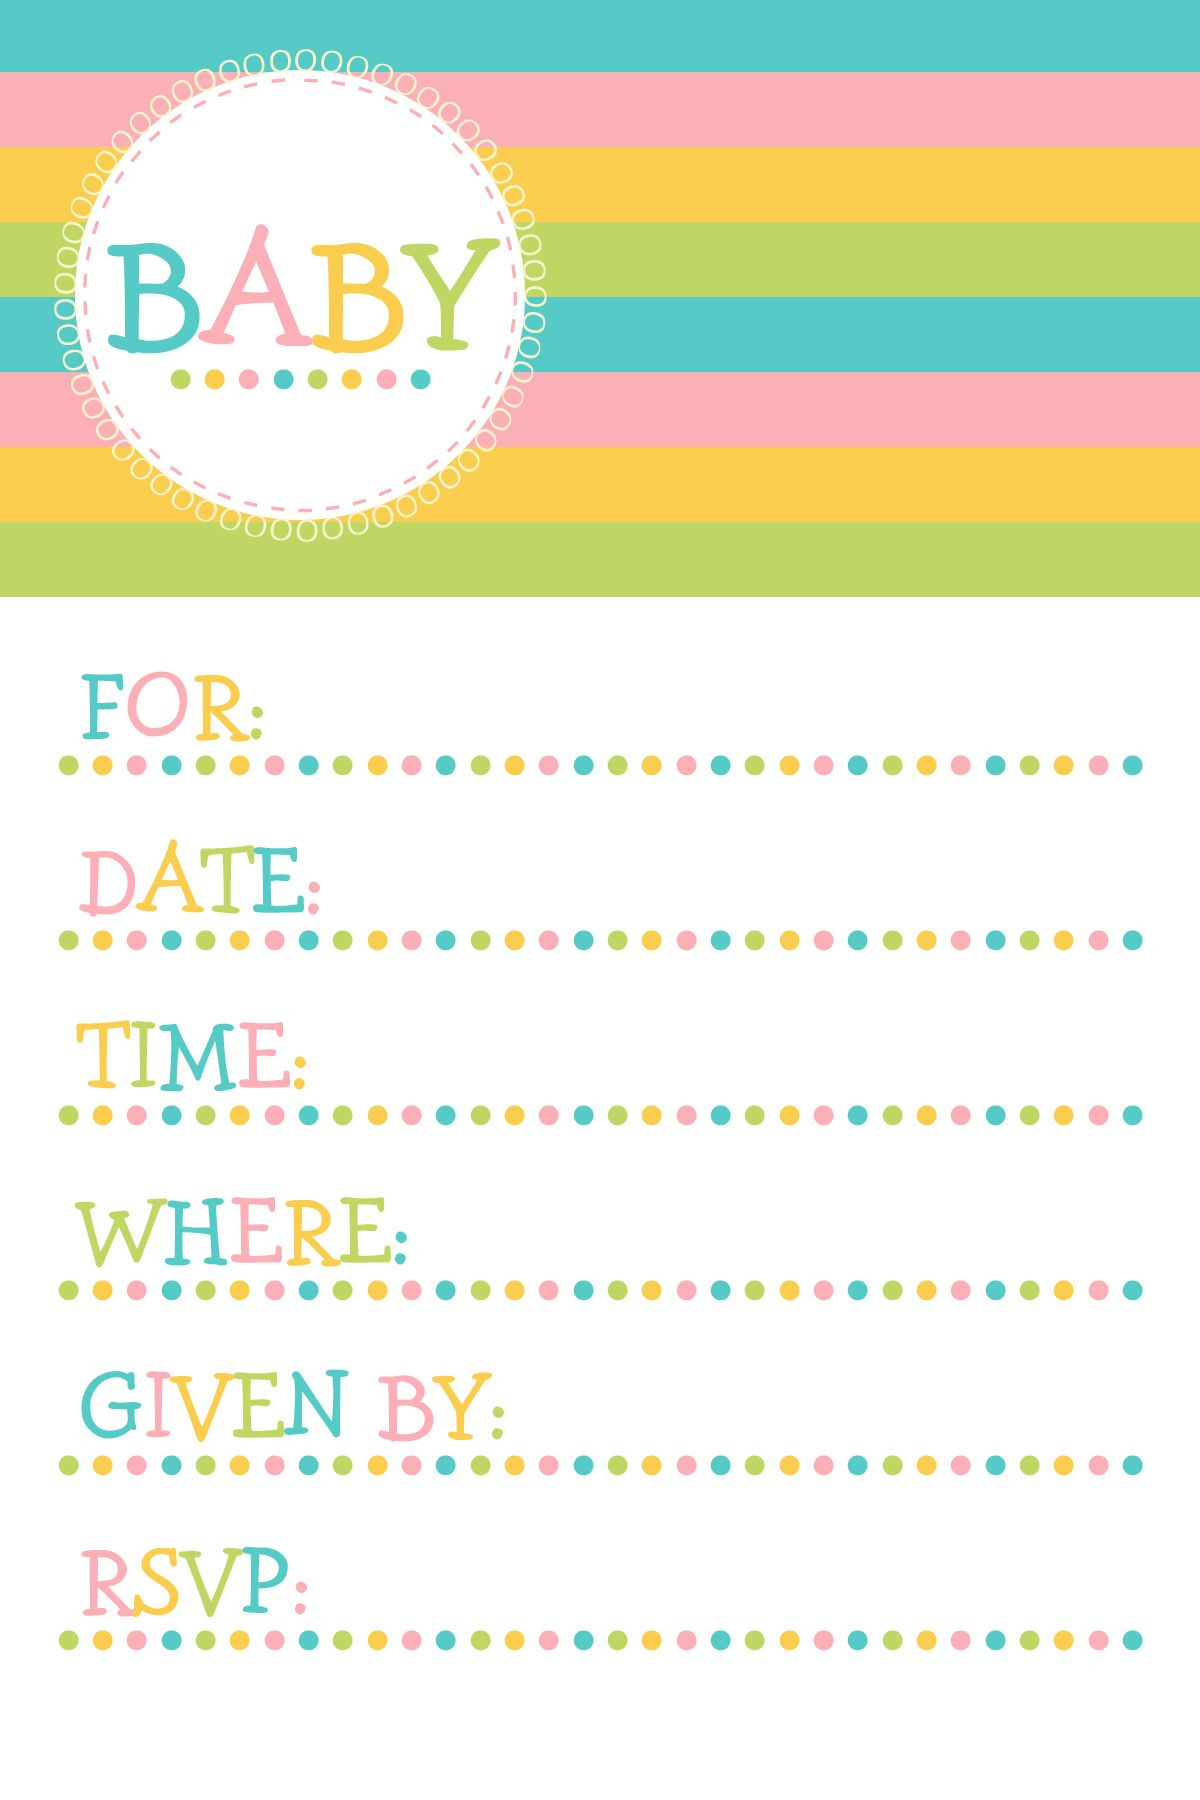 25 Adorable Free Printable Baby Shower Invitations - Free Baby Shower Invitation Maker Online Printable